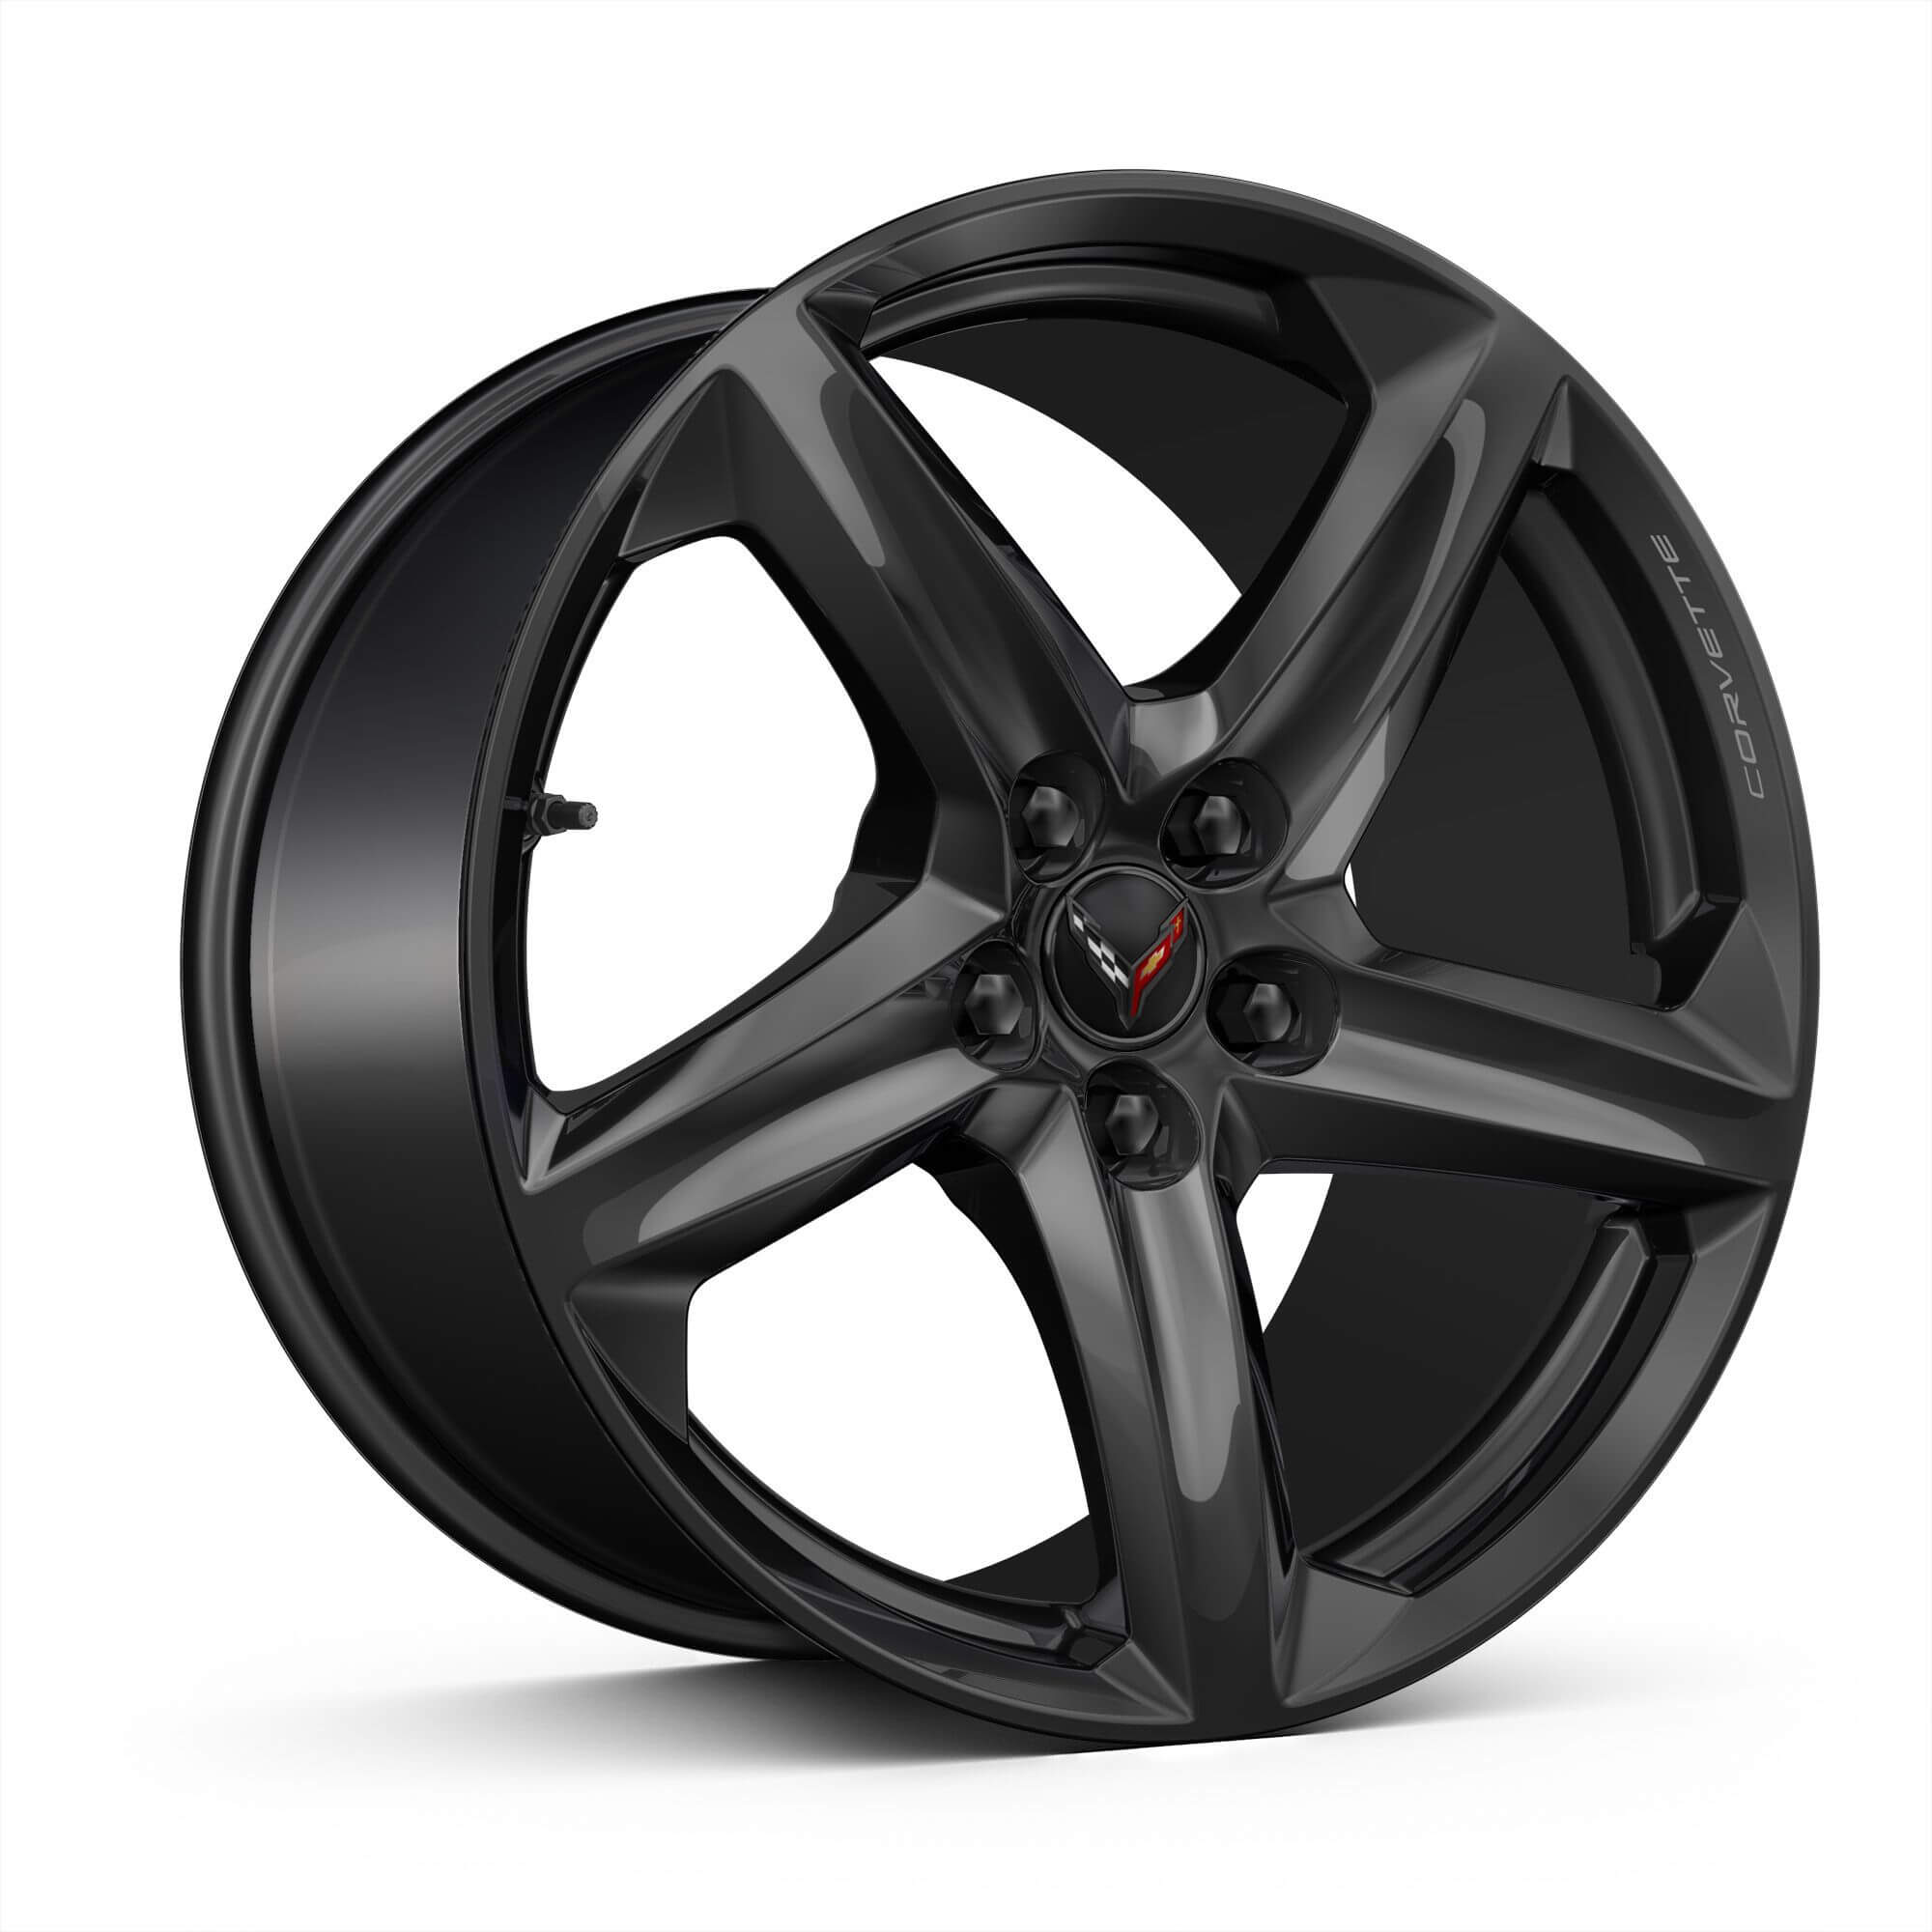 Carbon Flash metallic painted- Carbon Fiber Wheels $9,995